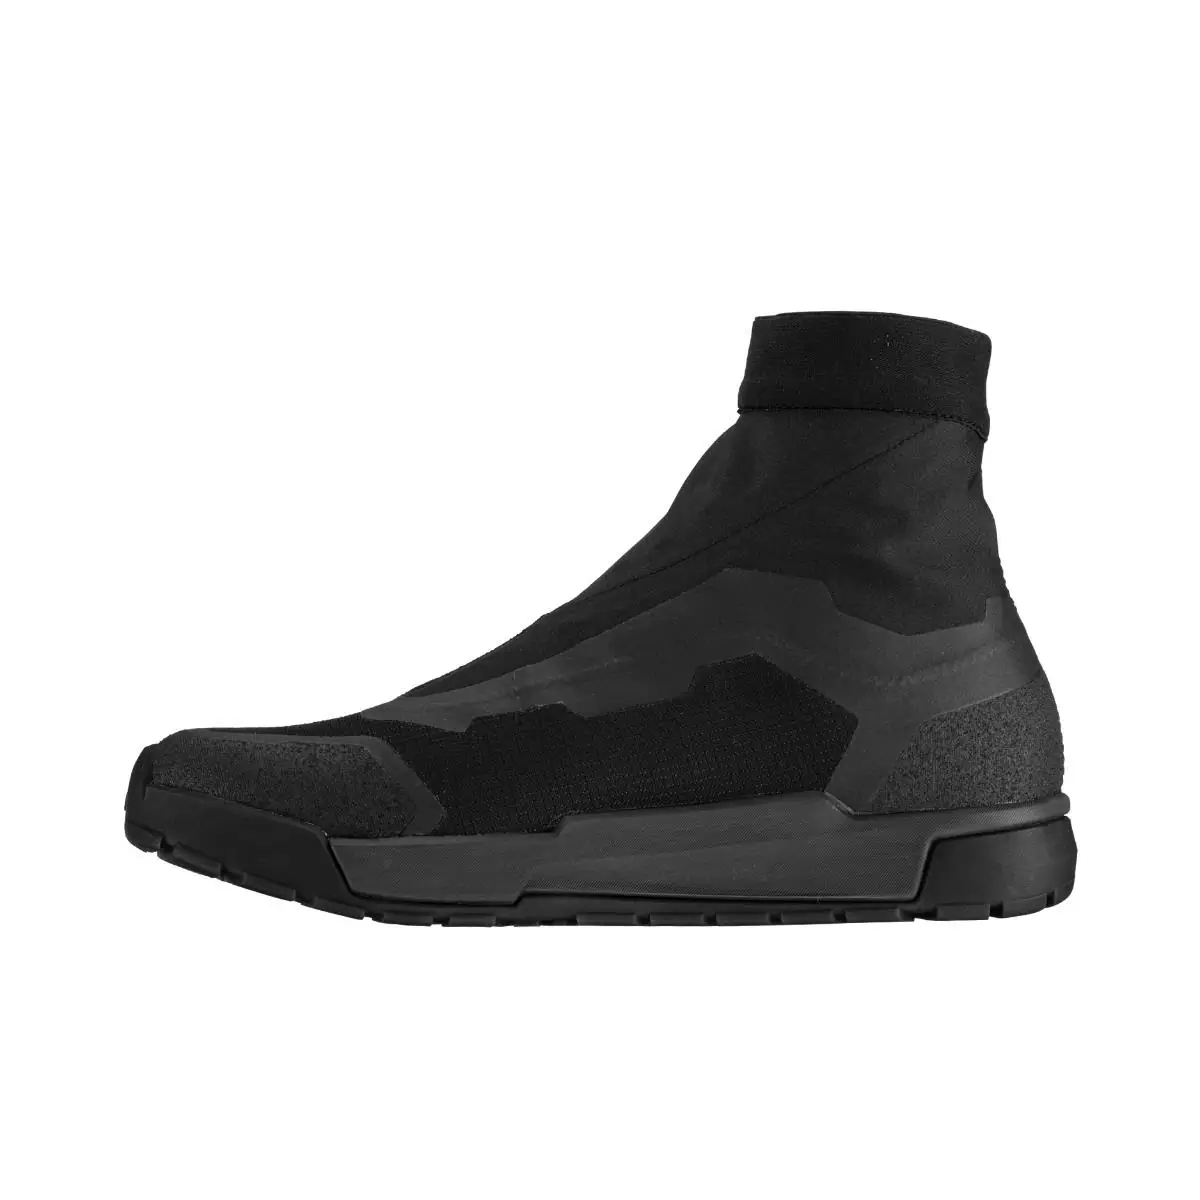 Waterproof Shoes MTB 7.0 HydraDri Flat Black Size 45.5 #5